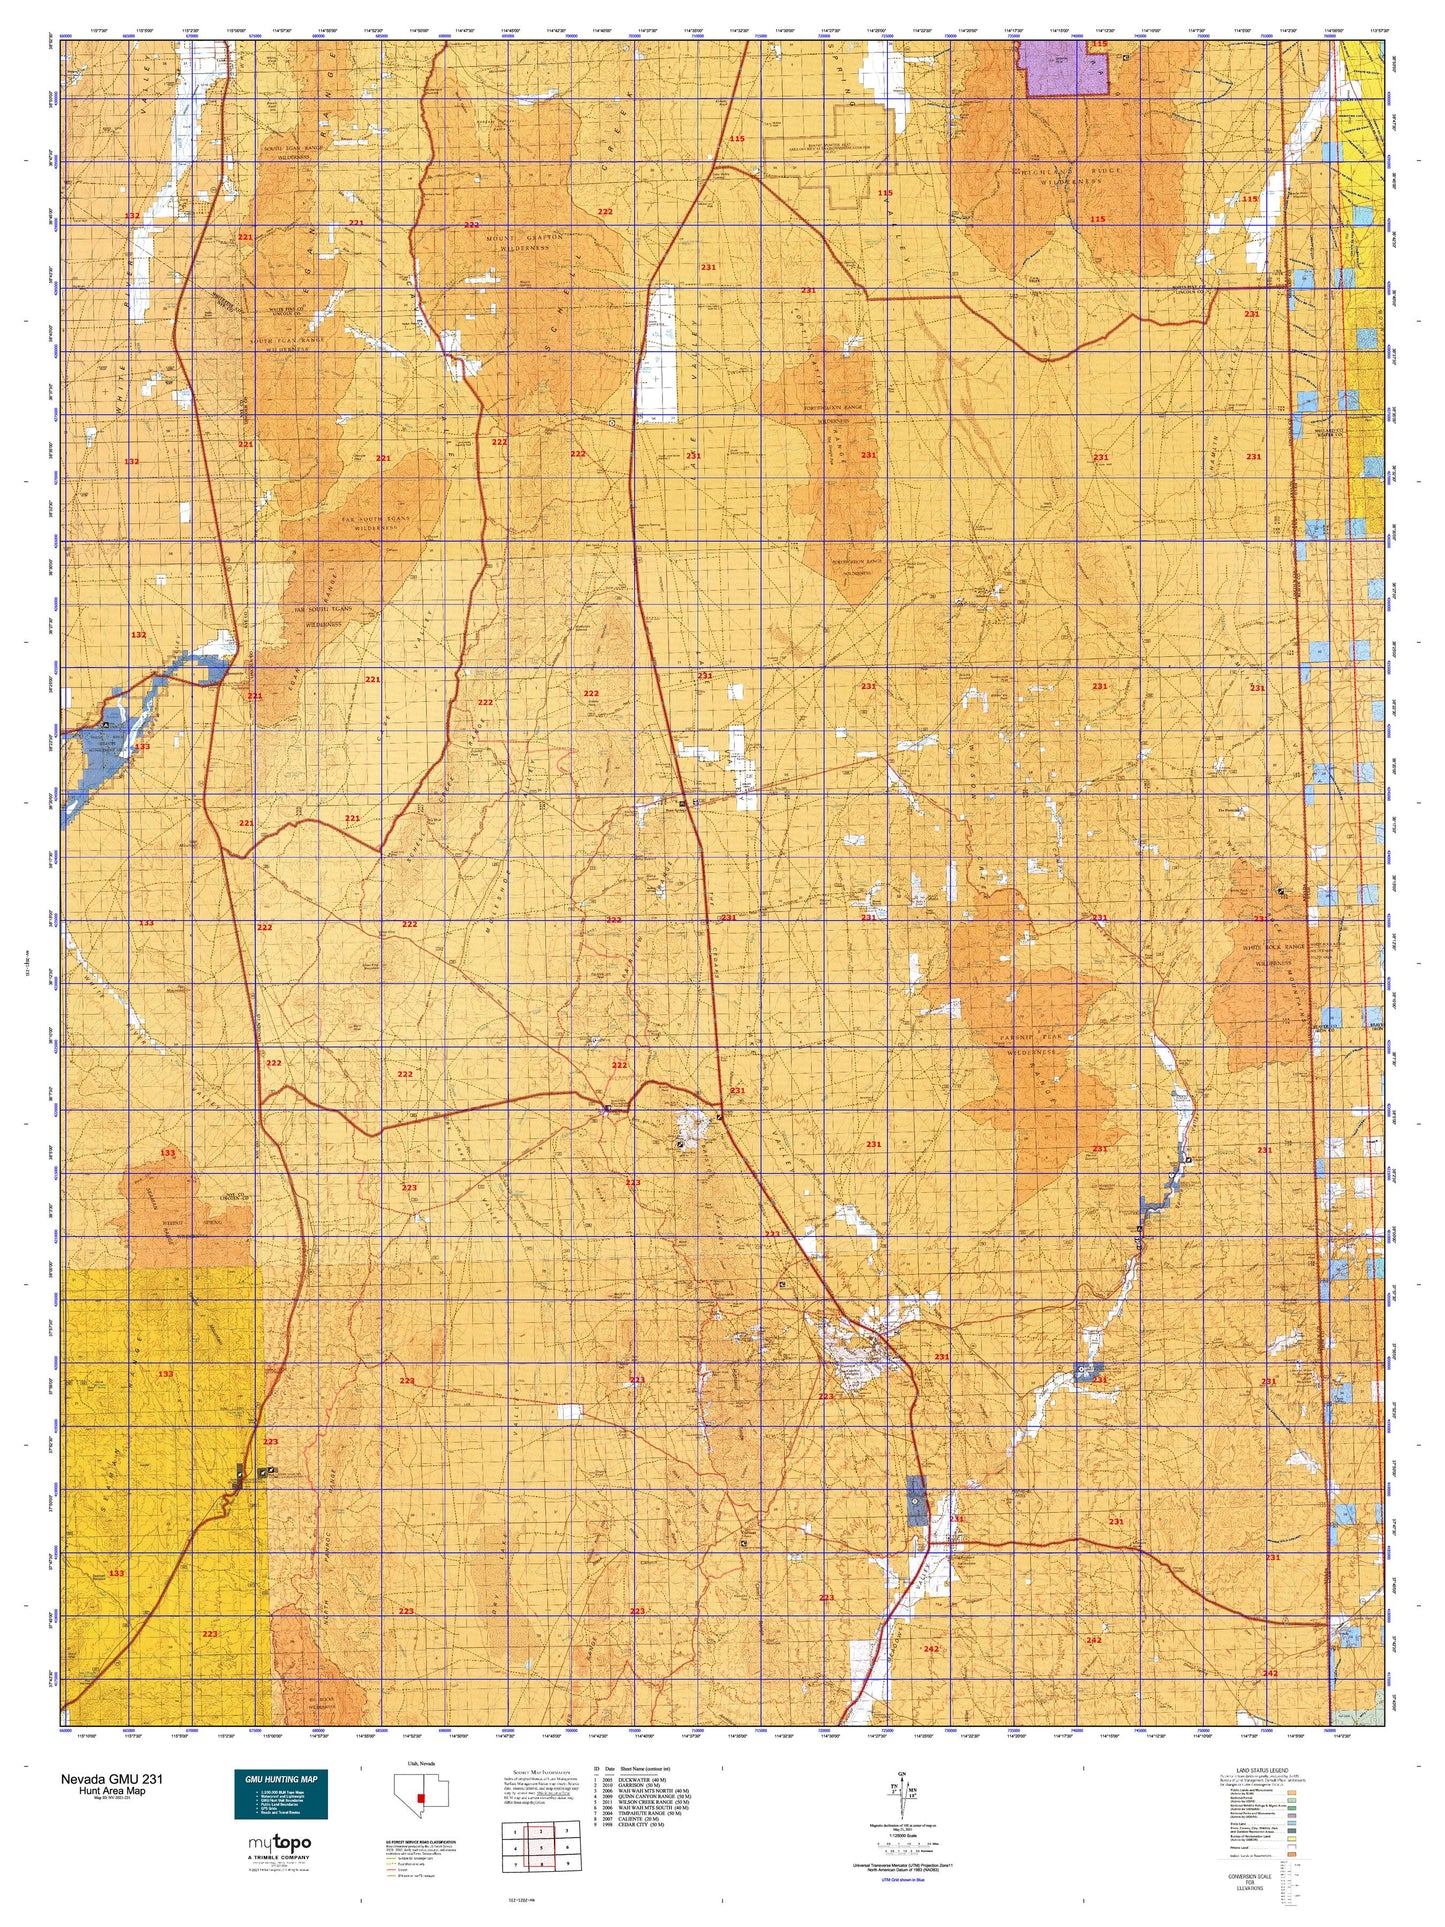 Nevada GMU 231 Map Image